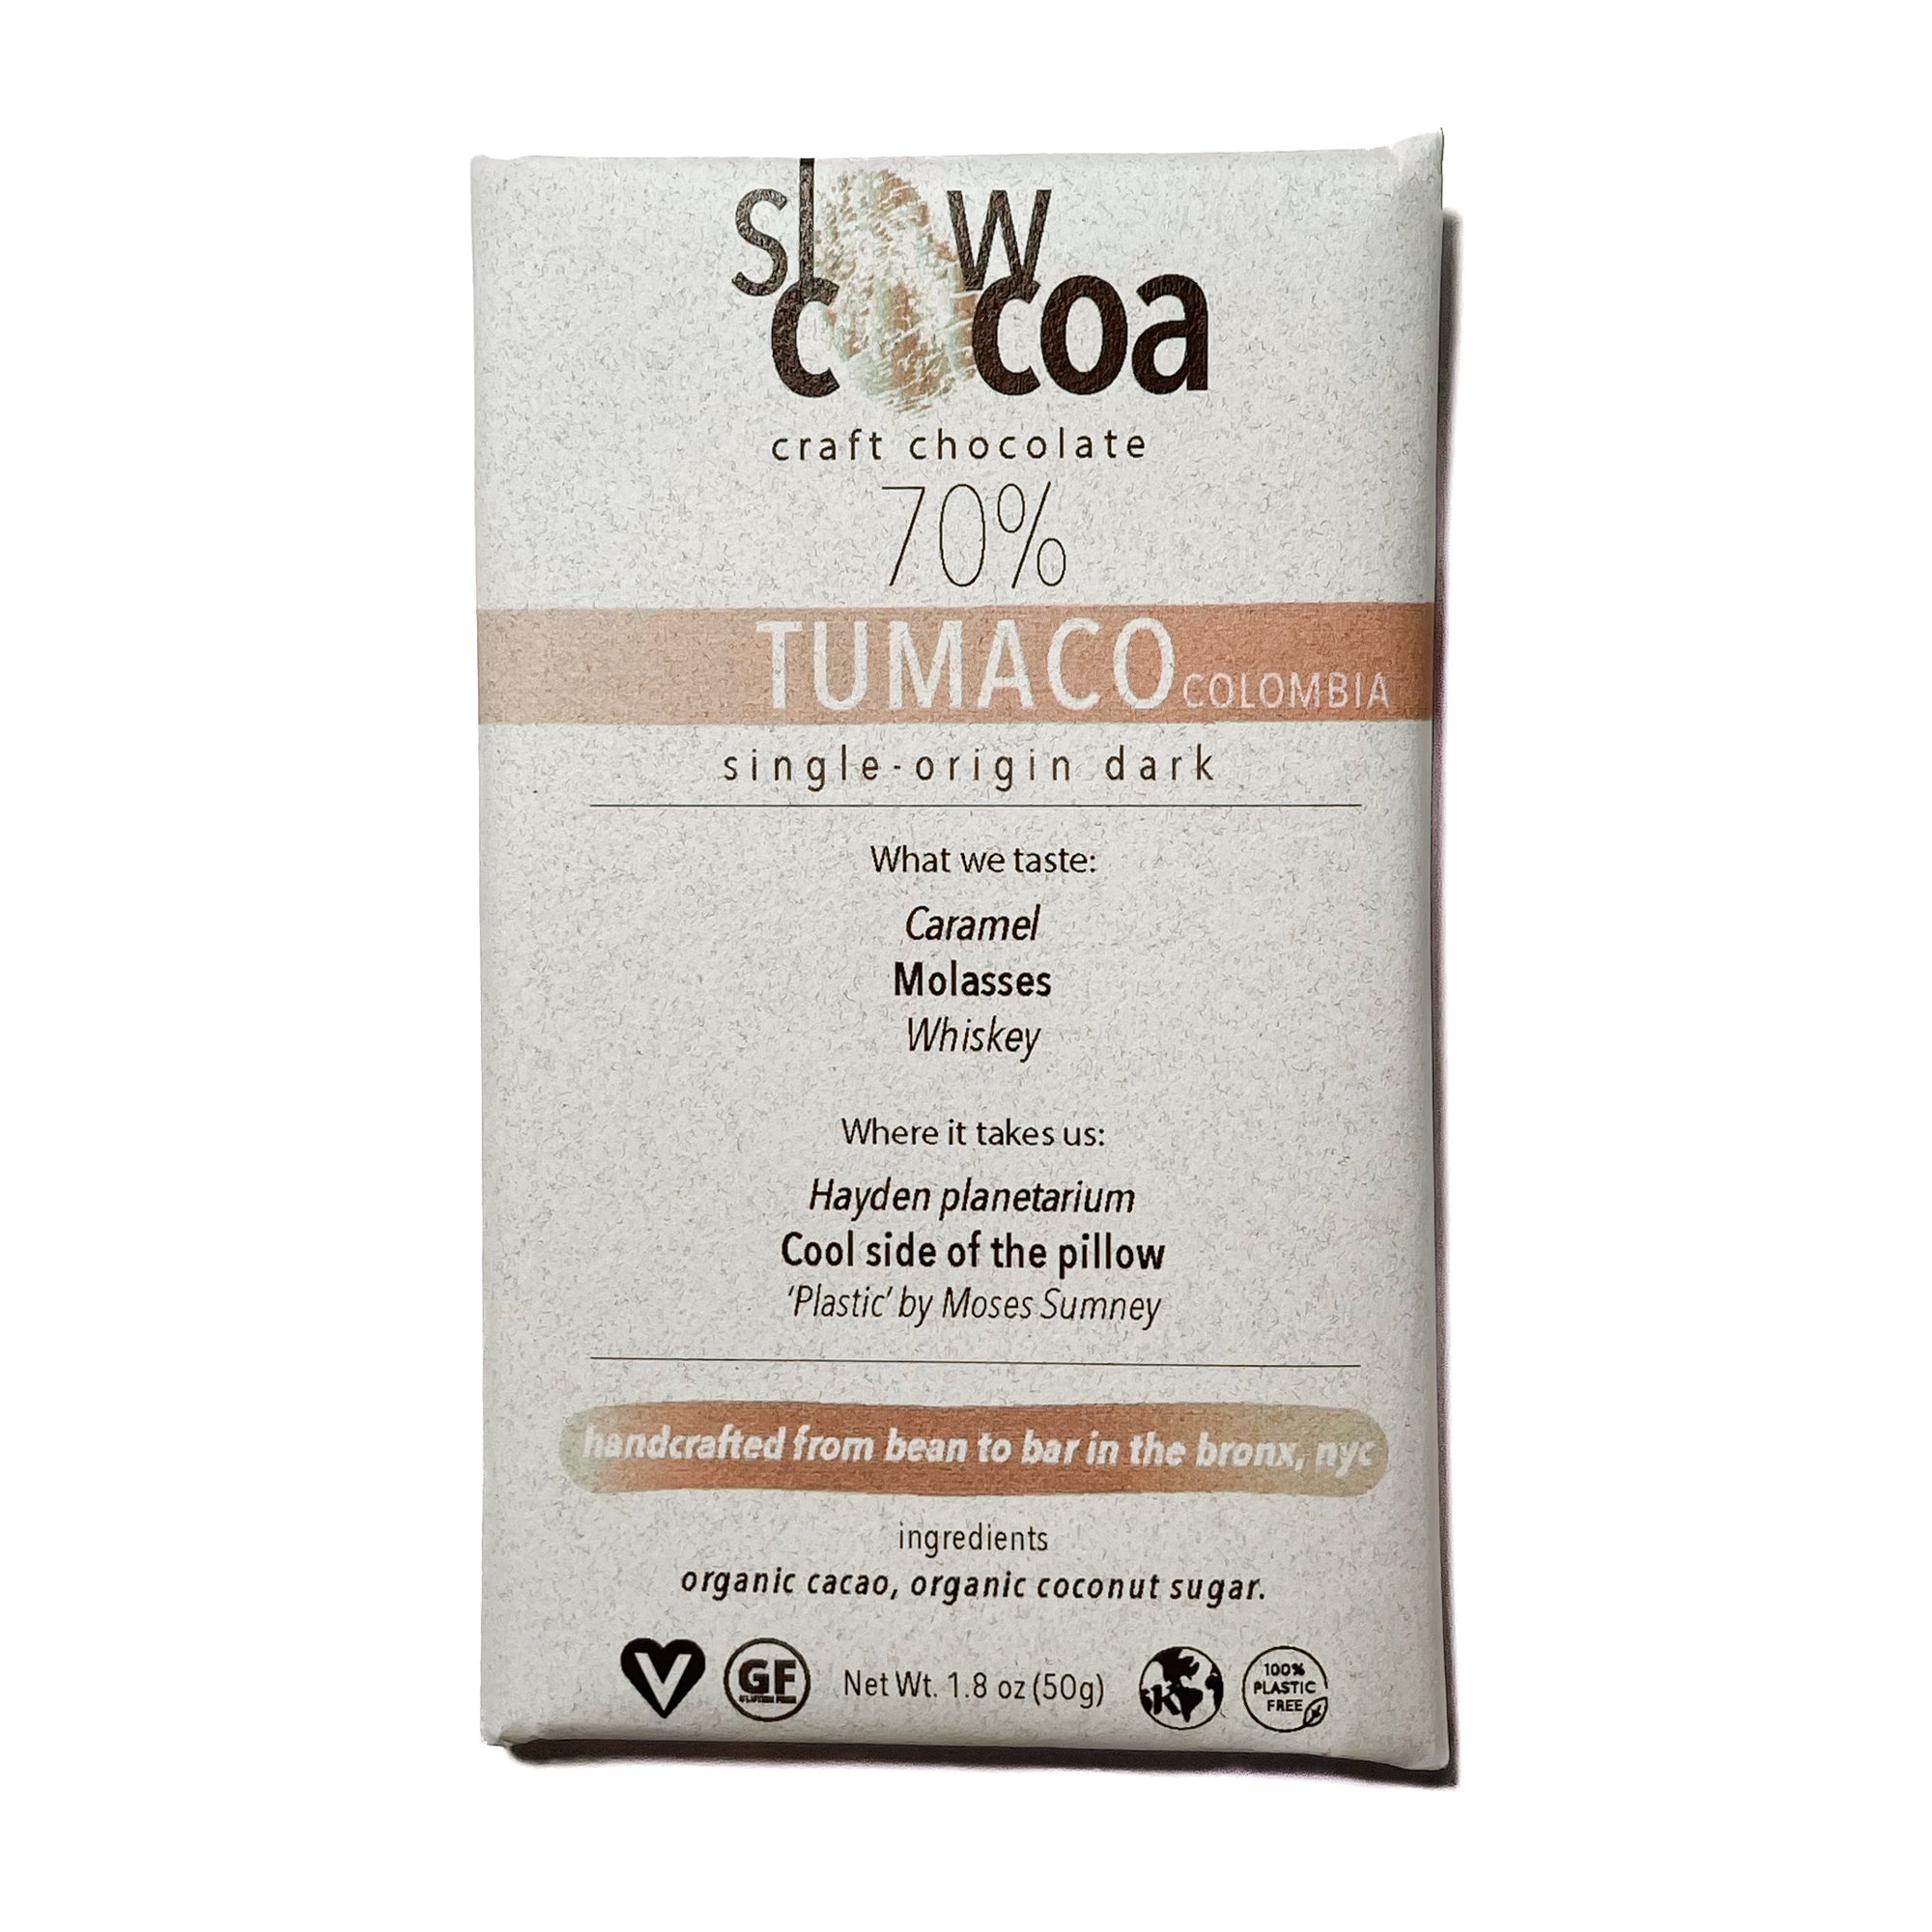 70% Tumaco | coconut sugar